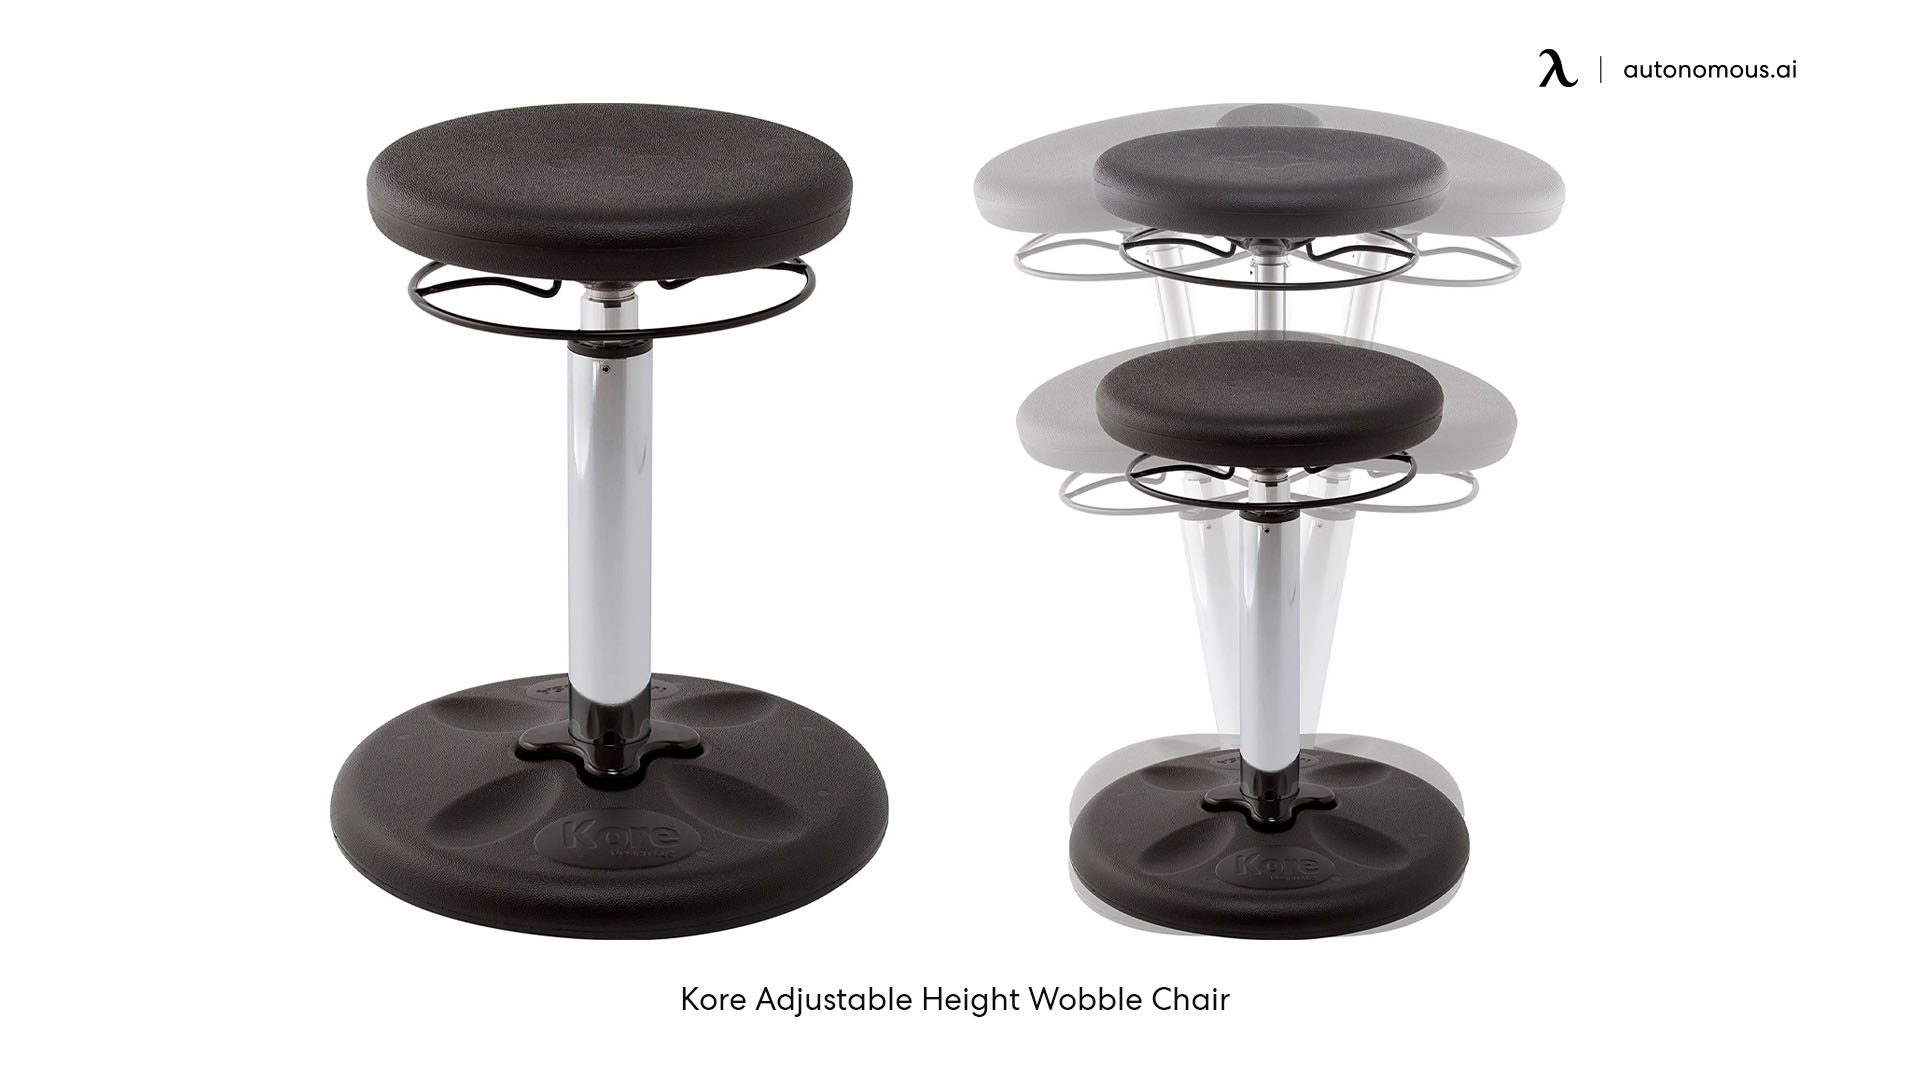 Kore Adjustable Height Wobble Chair